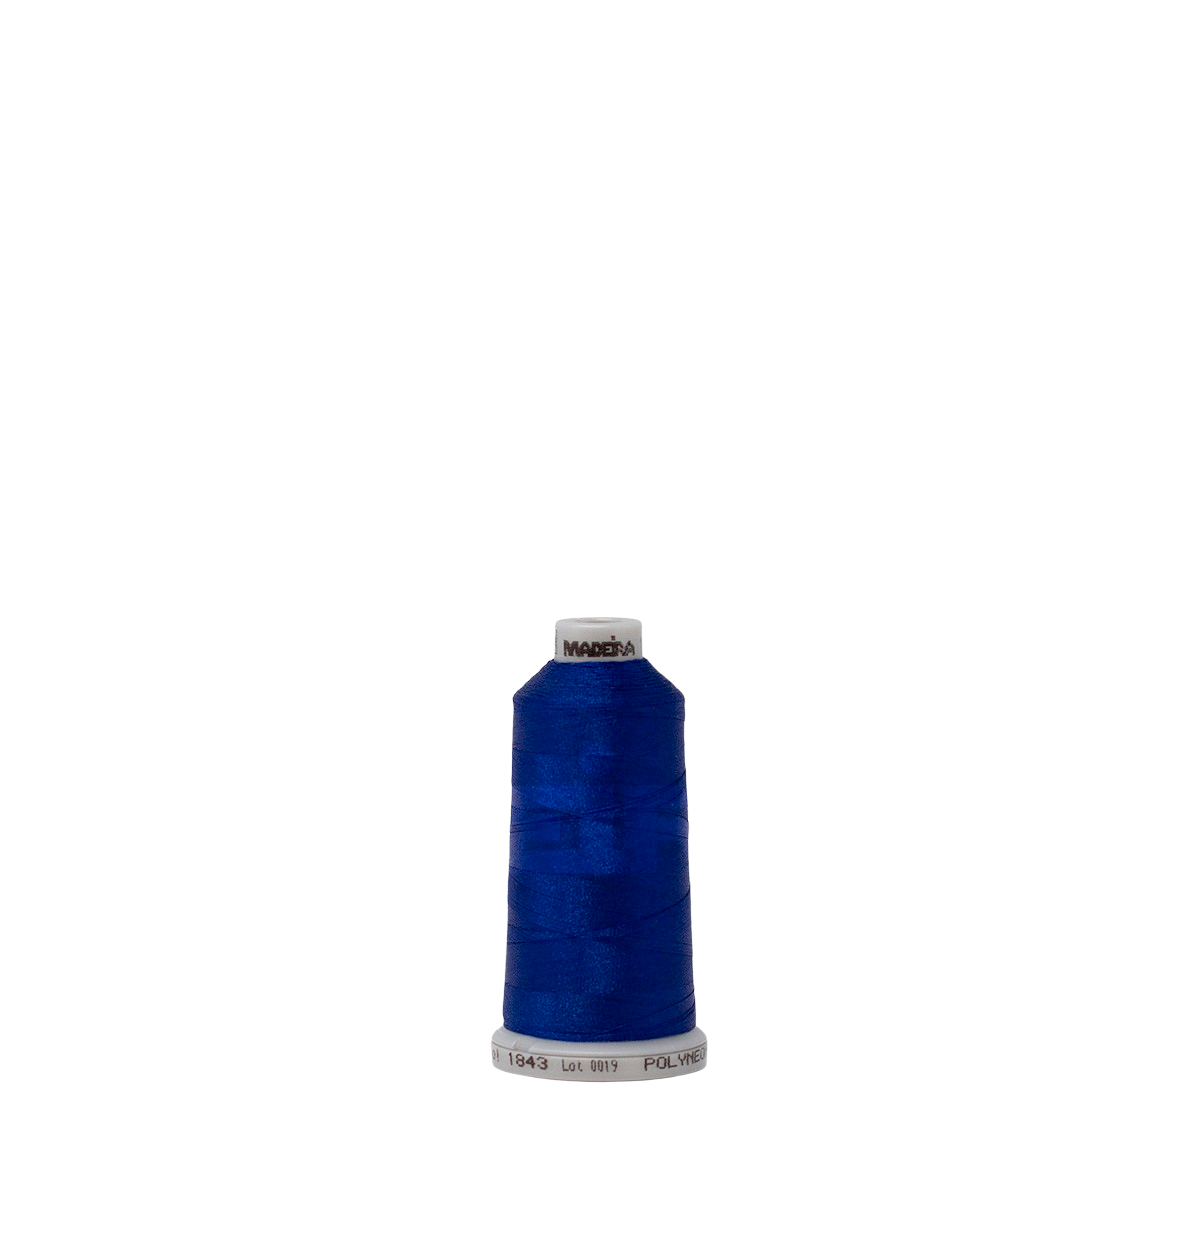 Persian Blue 1843 #40 Weight Madeira Polyneon Thread - 0